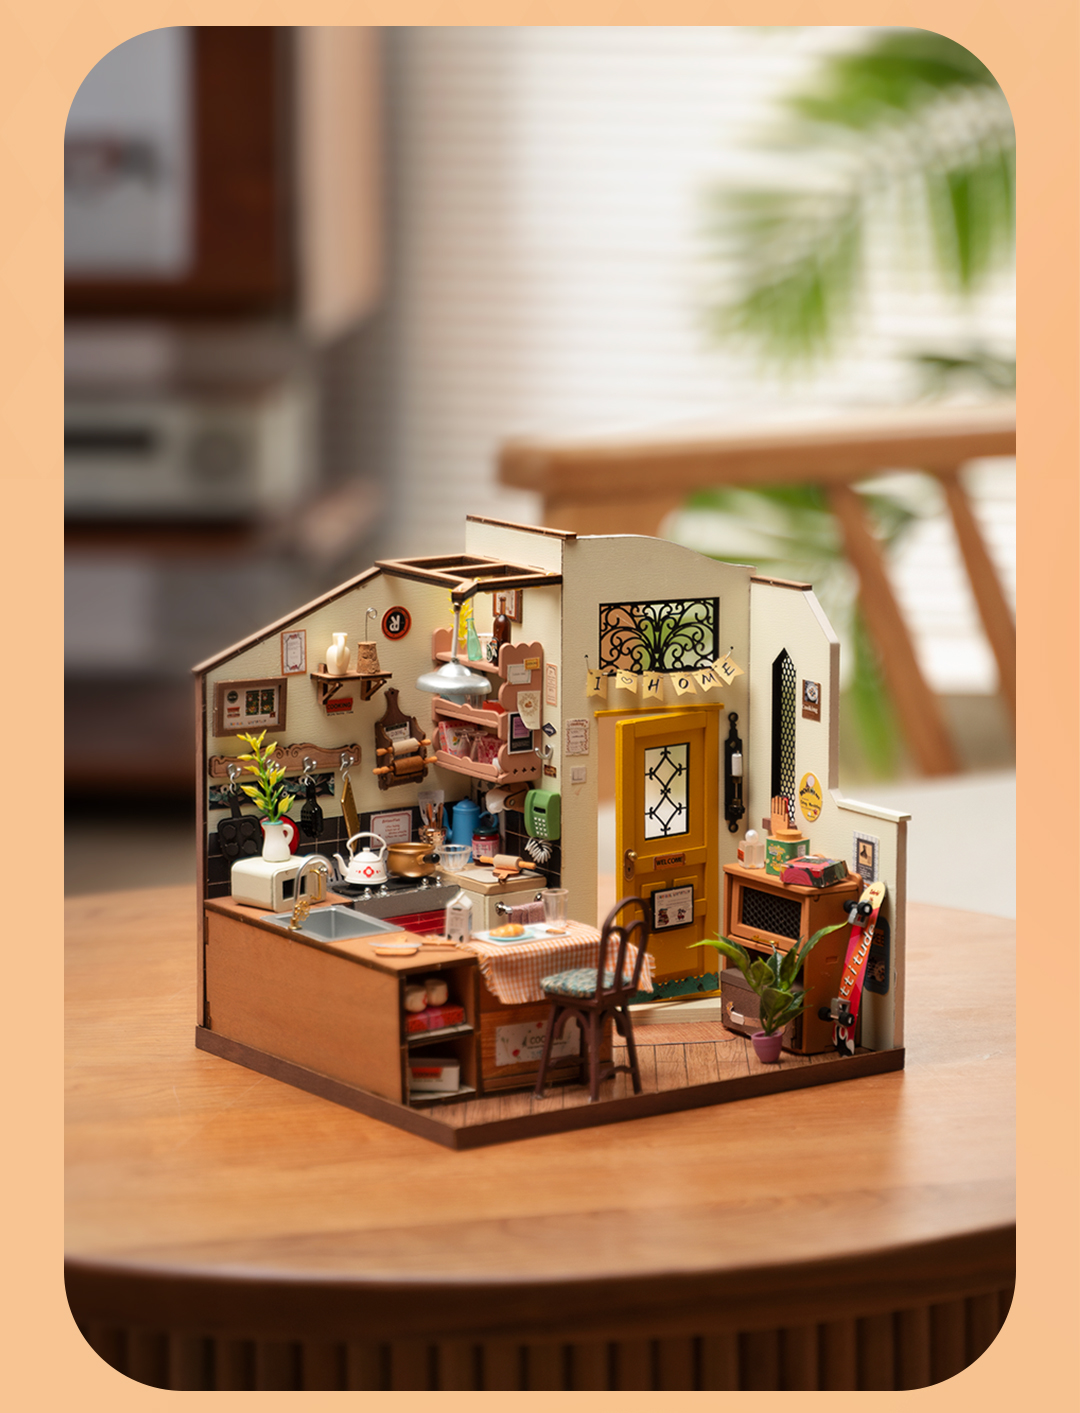 Rolife Cozy Homey Kitchen DIY 1:24 Miniature Dollhouse Home Decor Kid Toy  Gifts